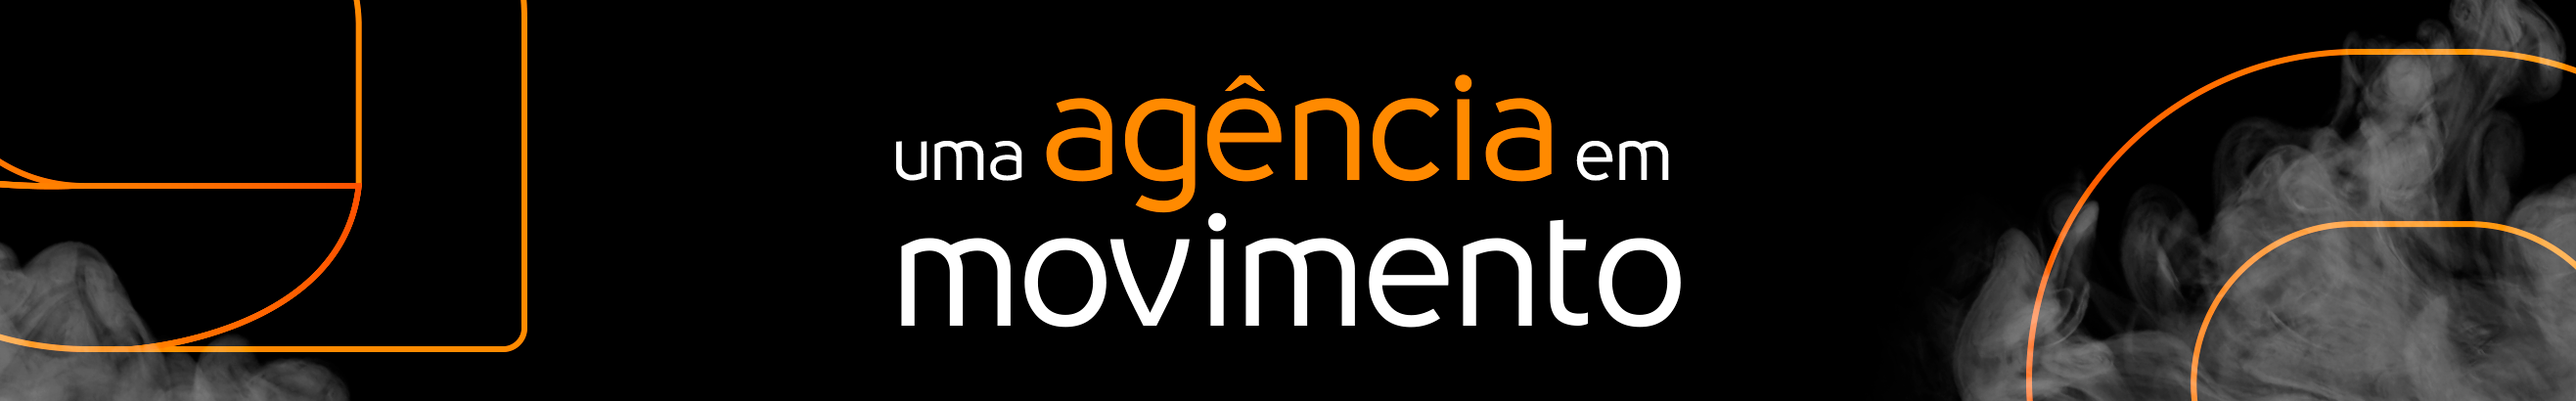 Agência Project's profile banner